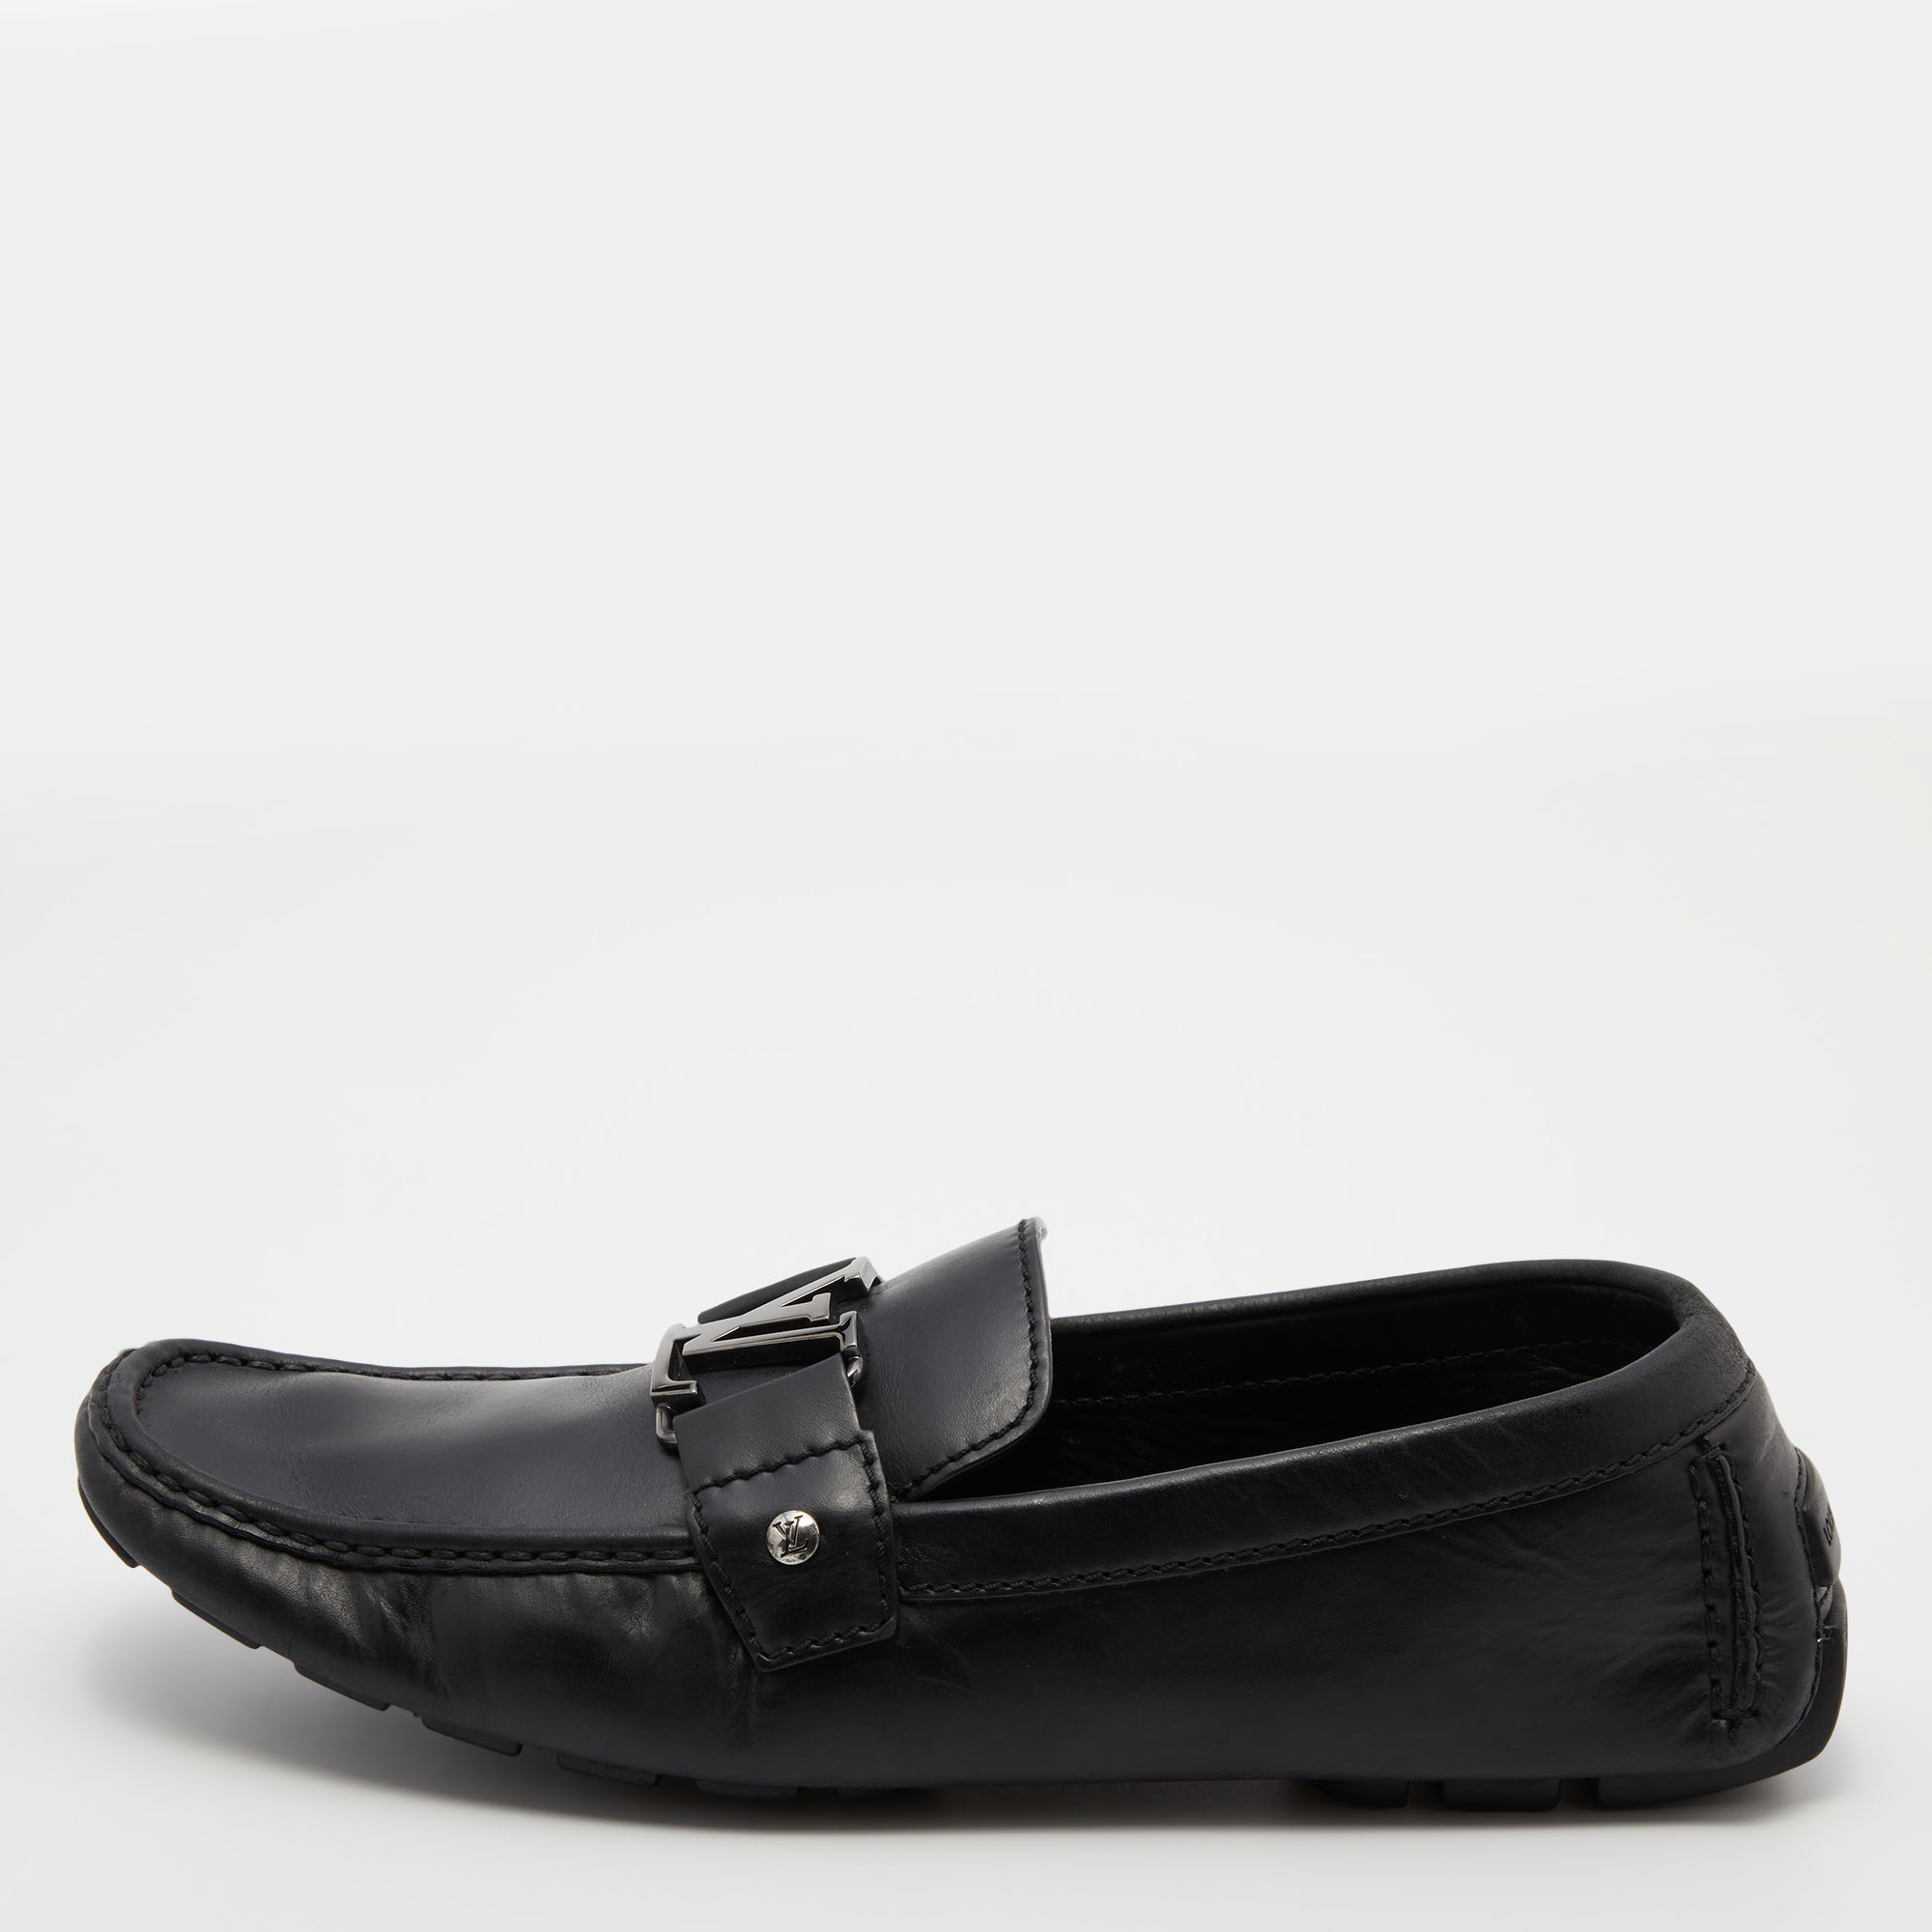 Louis Vuitton Black Leather Low Top Sneakers Size 42.5 Louis Vuitton